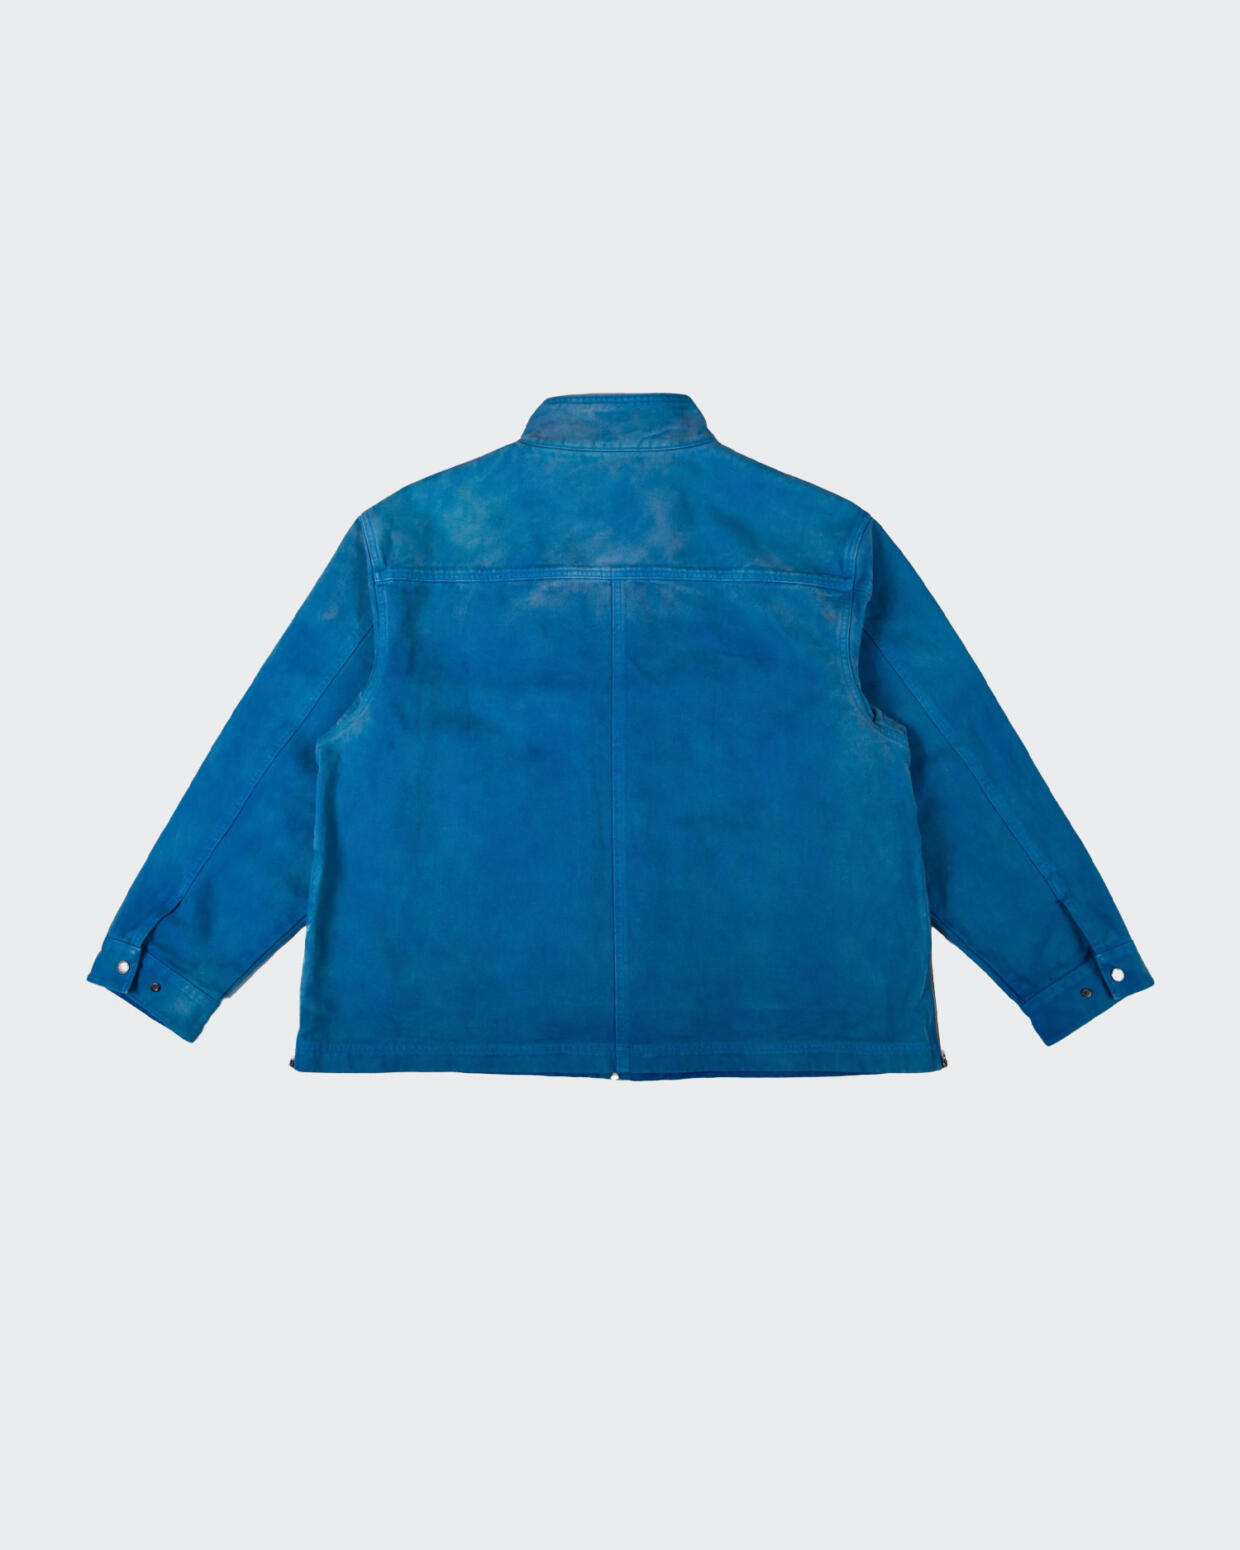 New Amsterdam Surf Association X RM Vermeer Blue Jacket